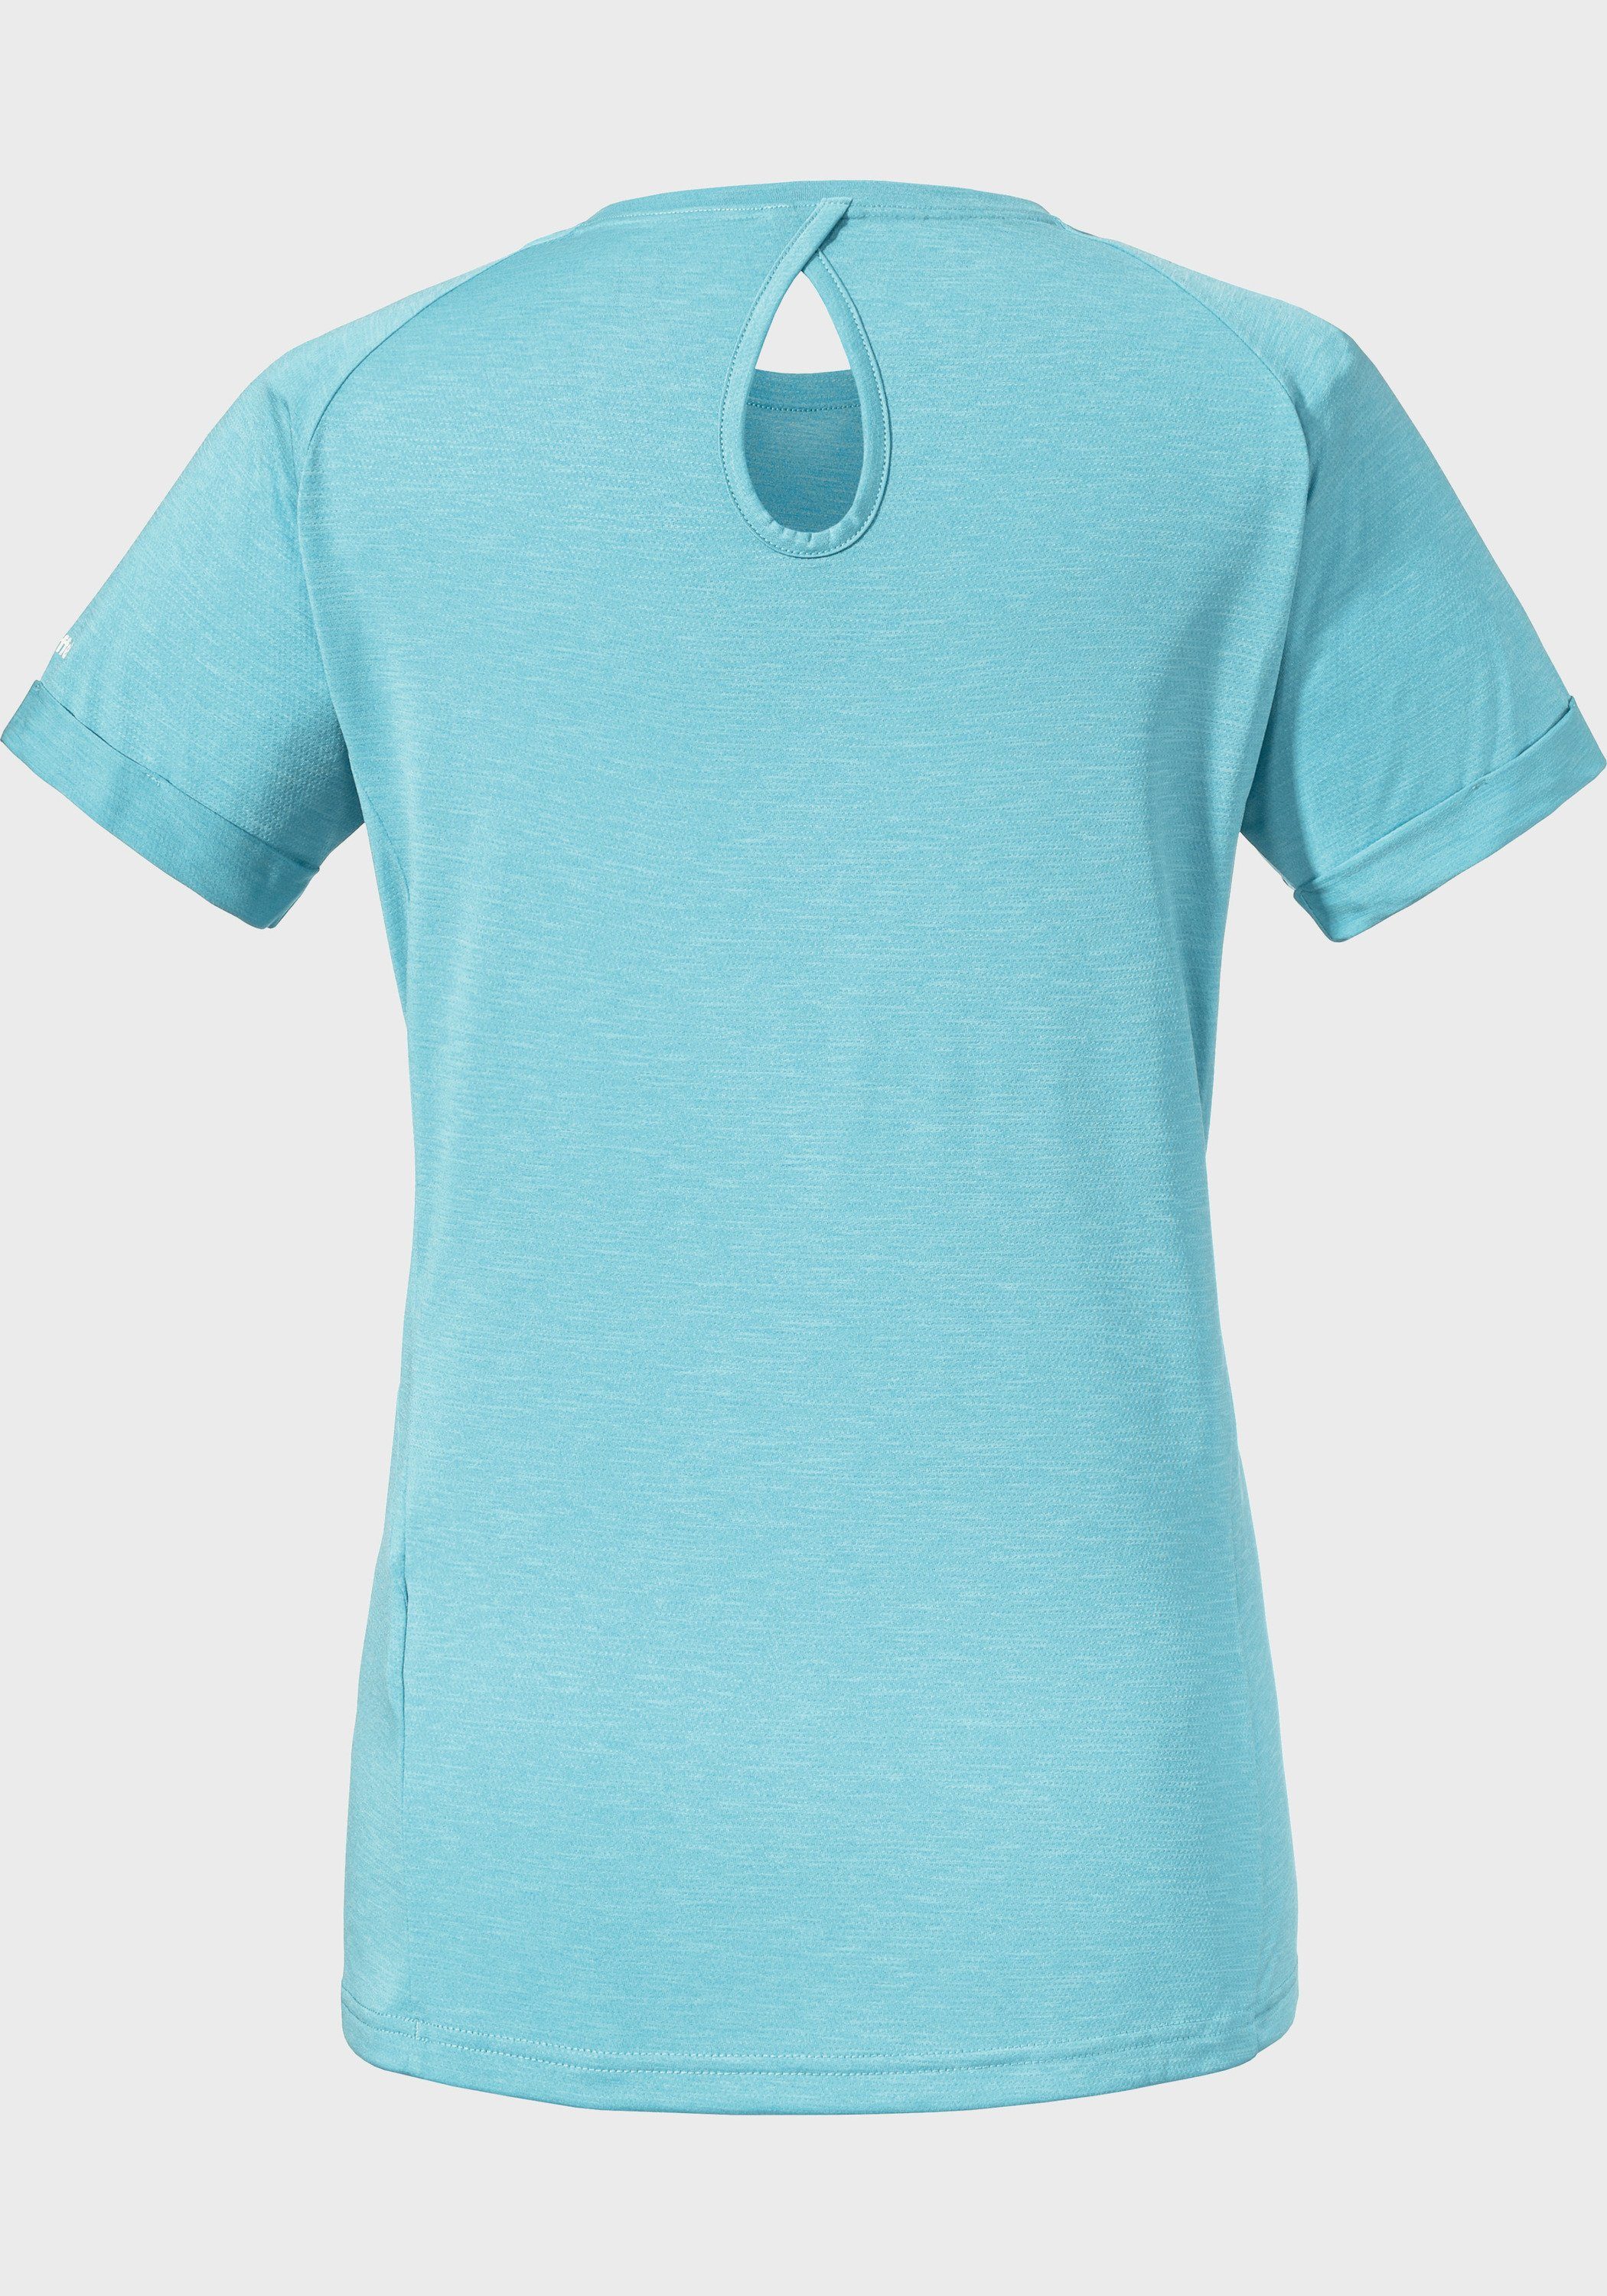 Schöffel T L blau Shirt Boise2 Funktionsshirt